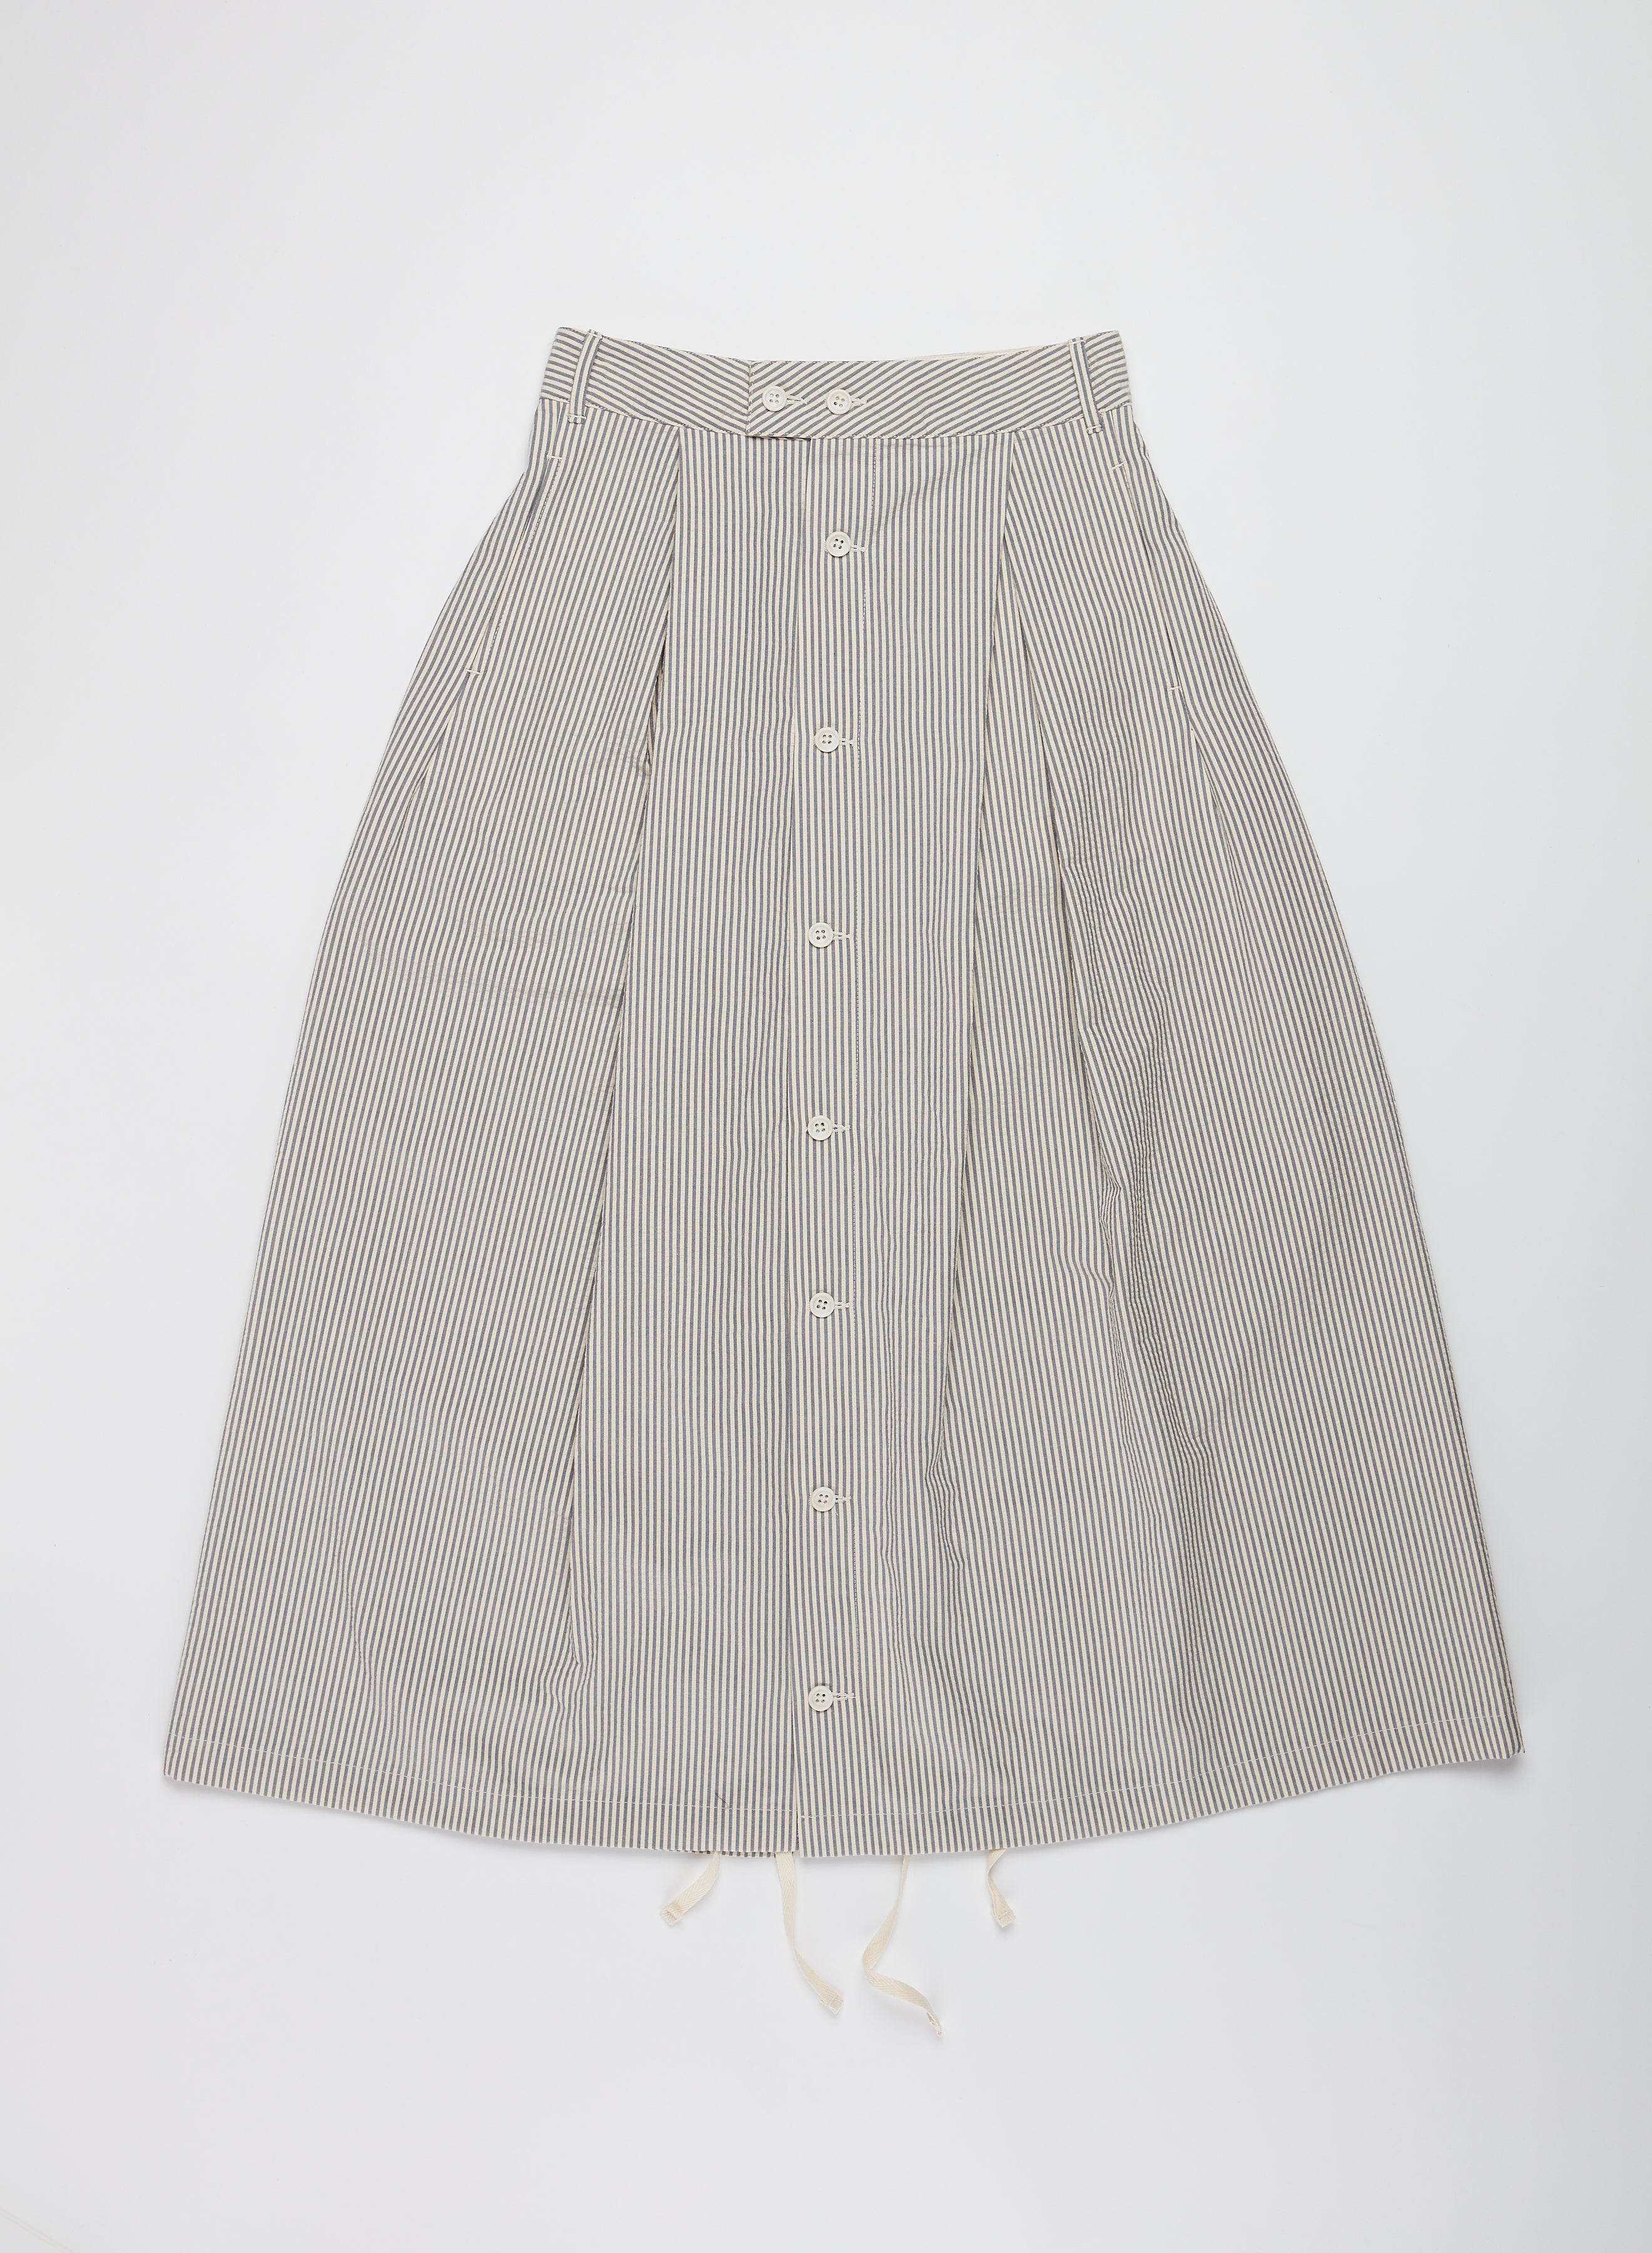 Tuck Skirt - Navy / Natural Cotton Seersucker